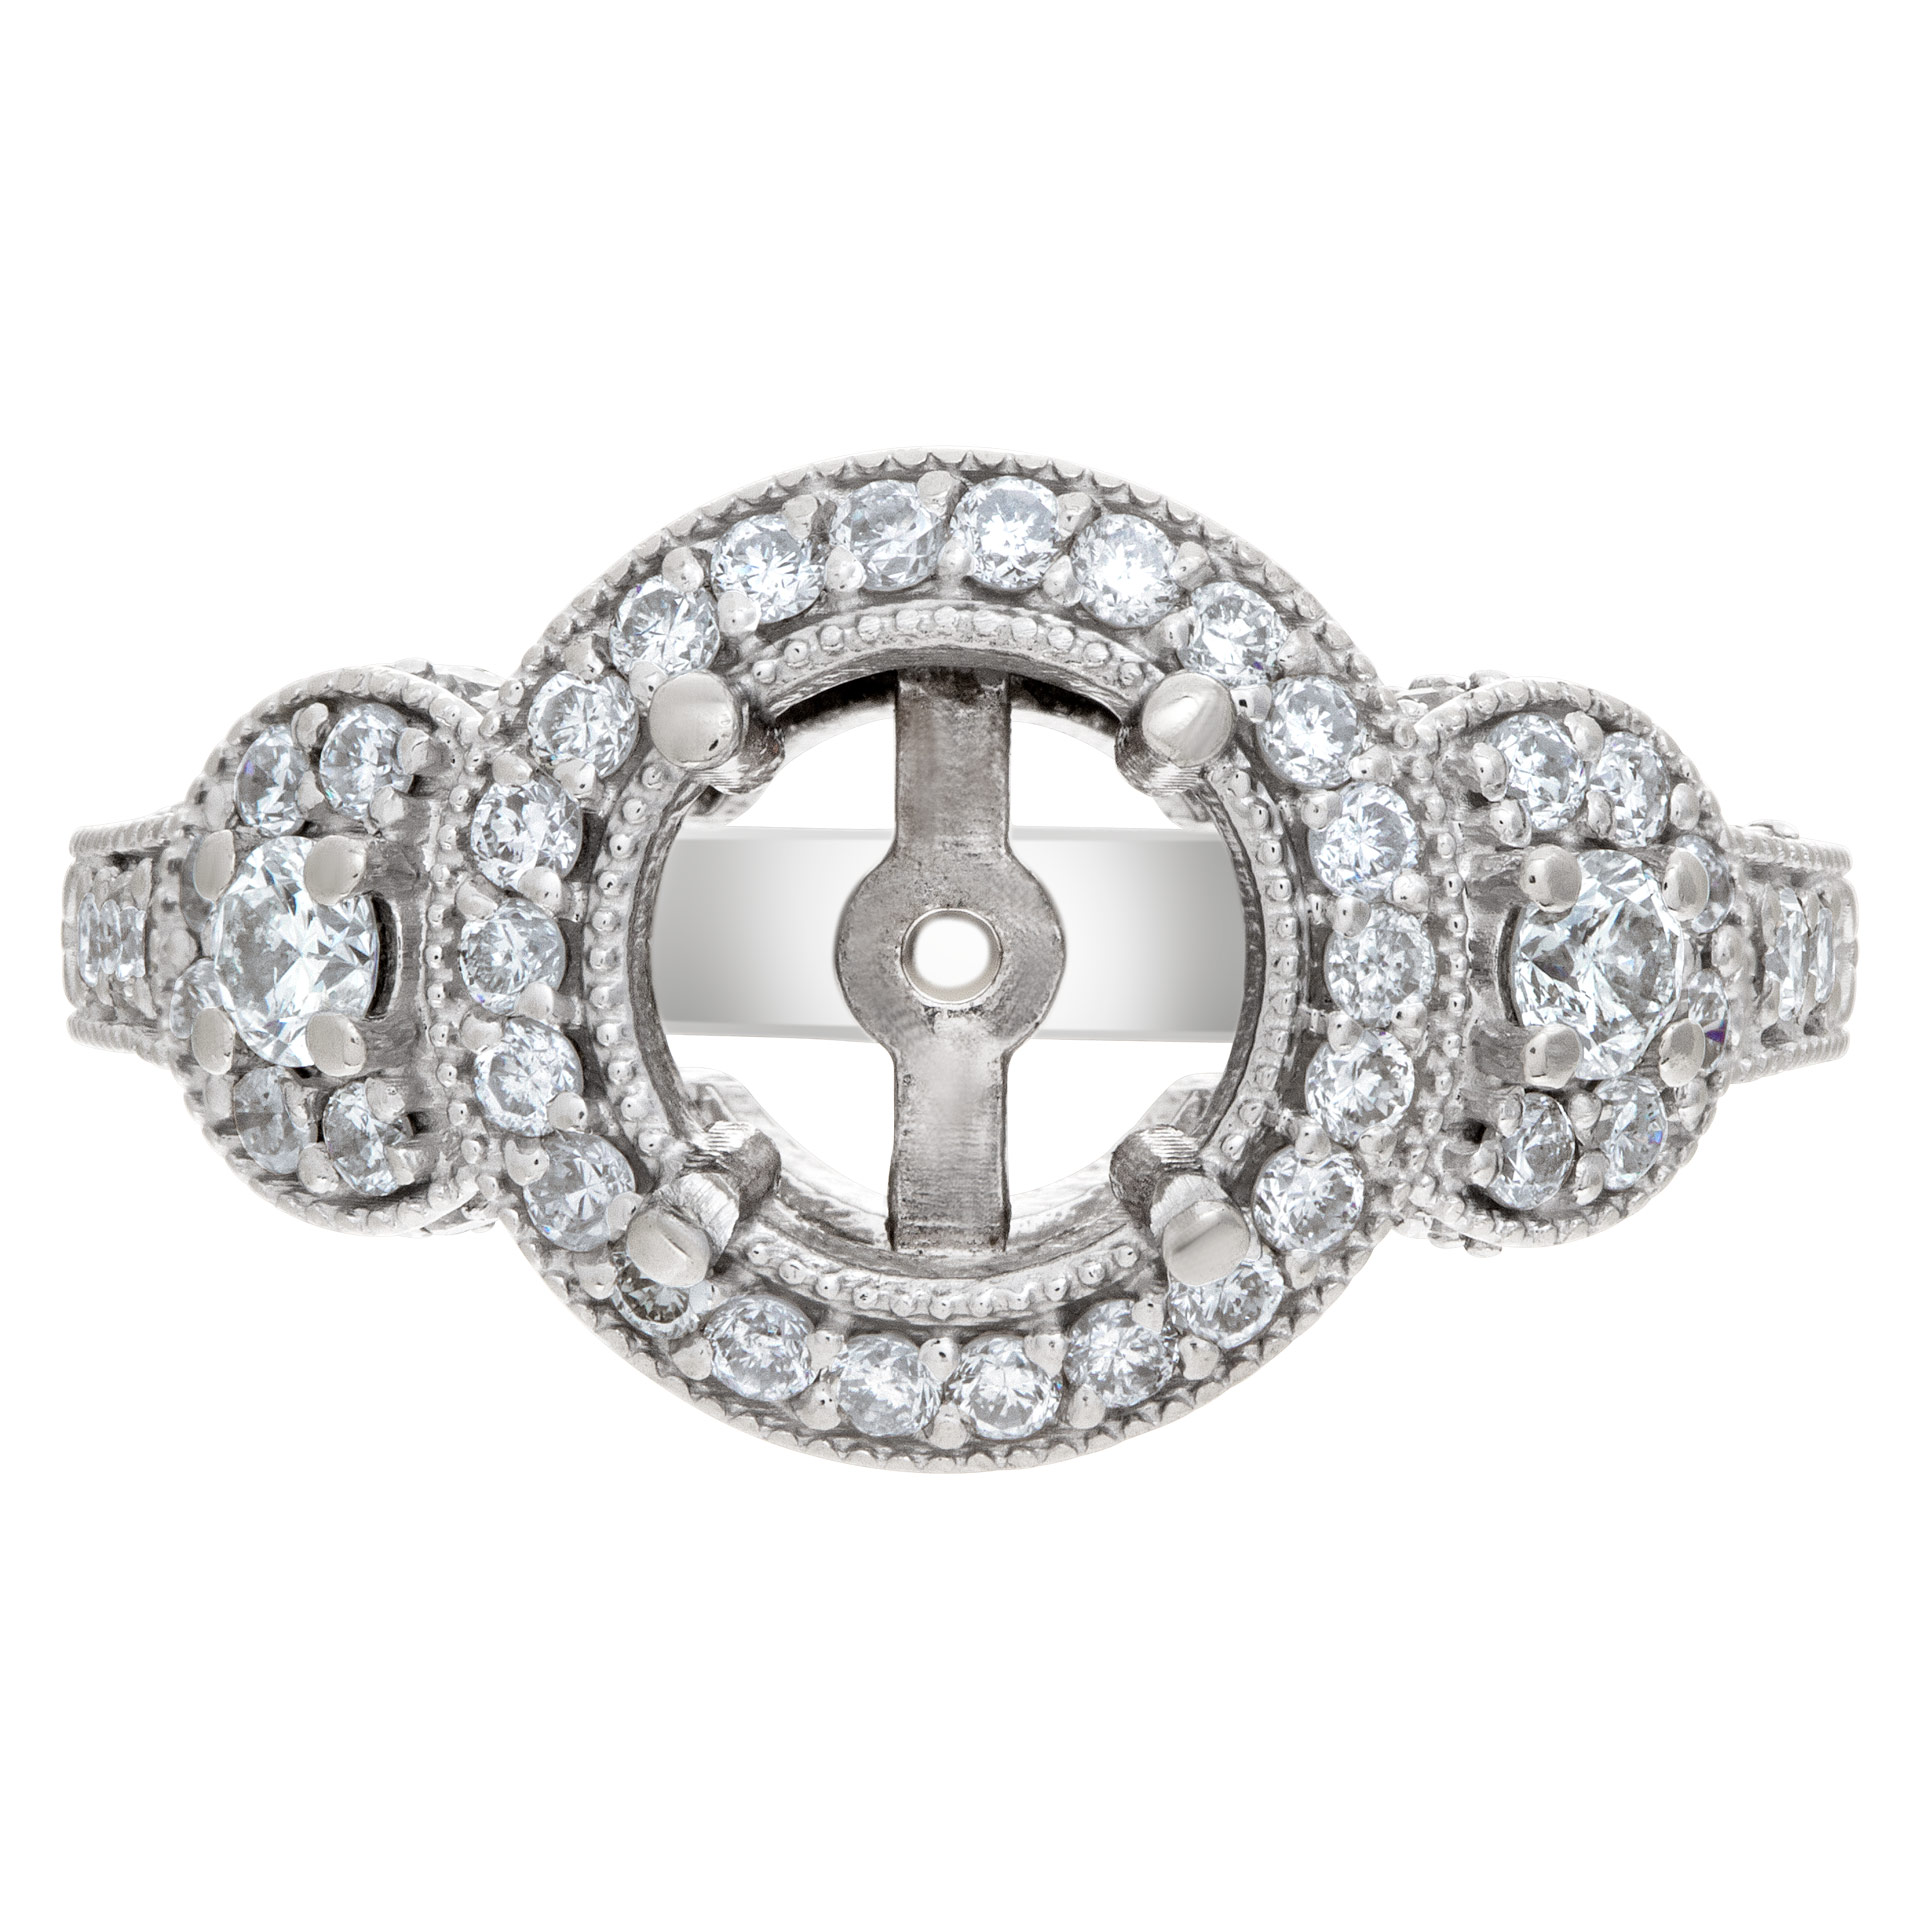 Beautiful diamond setting with approximately 1 carat full cut round brilliant diamonds, set in 14k white gold image 2